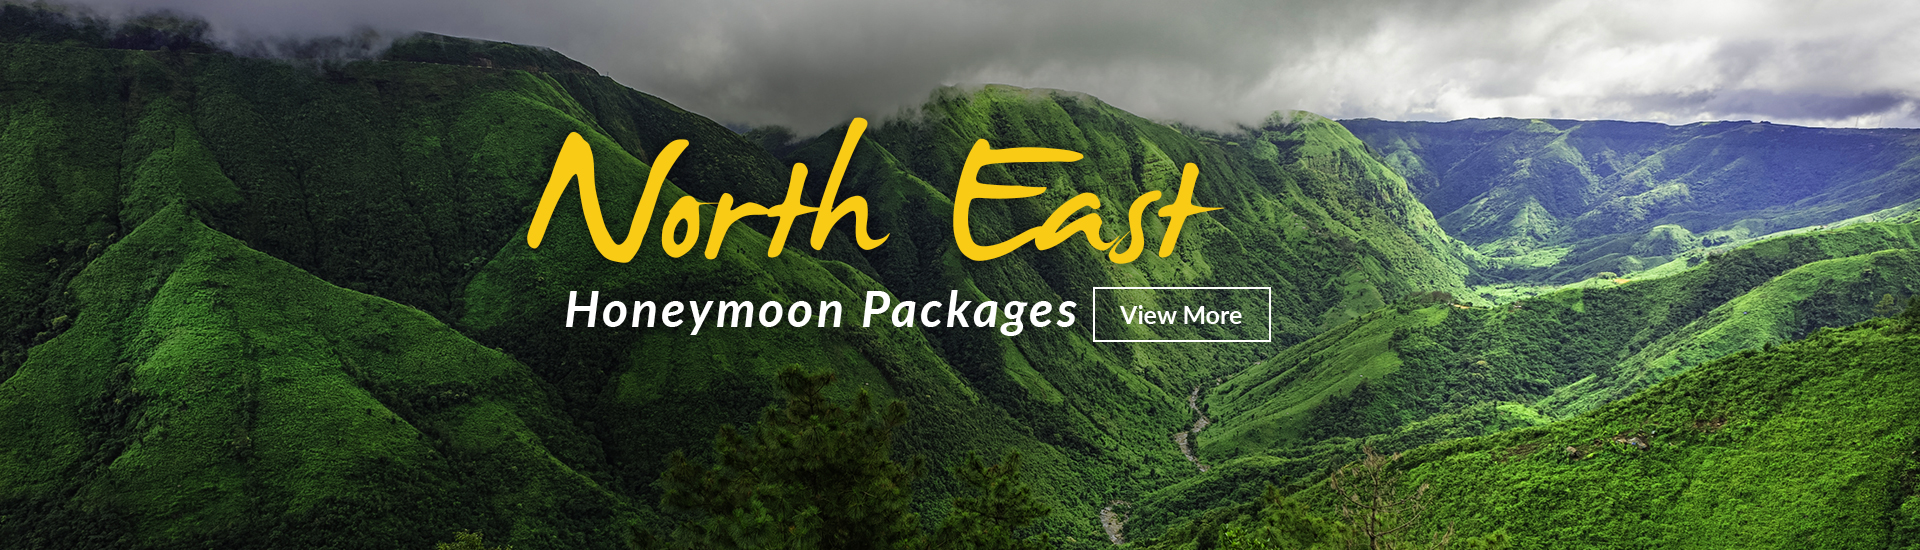 Honeymoon Package! Wish your near... - Hotel Mystic Mountain | Facebook